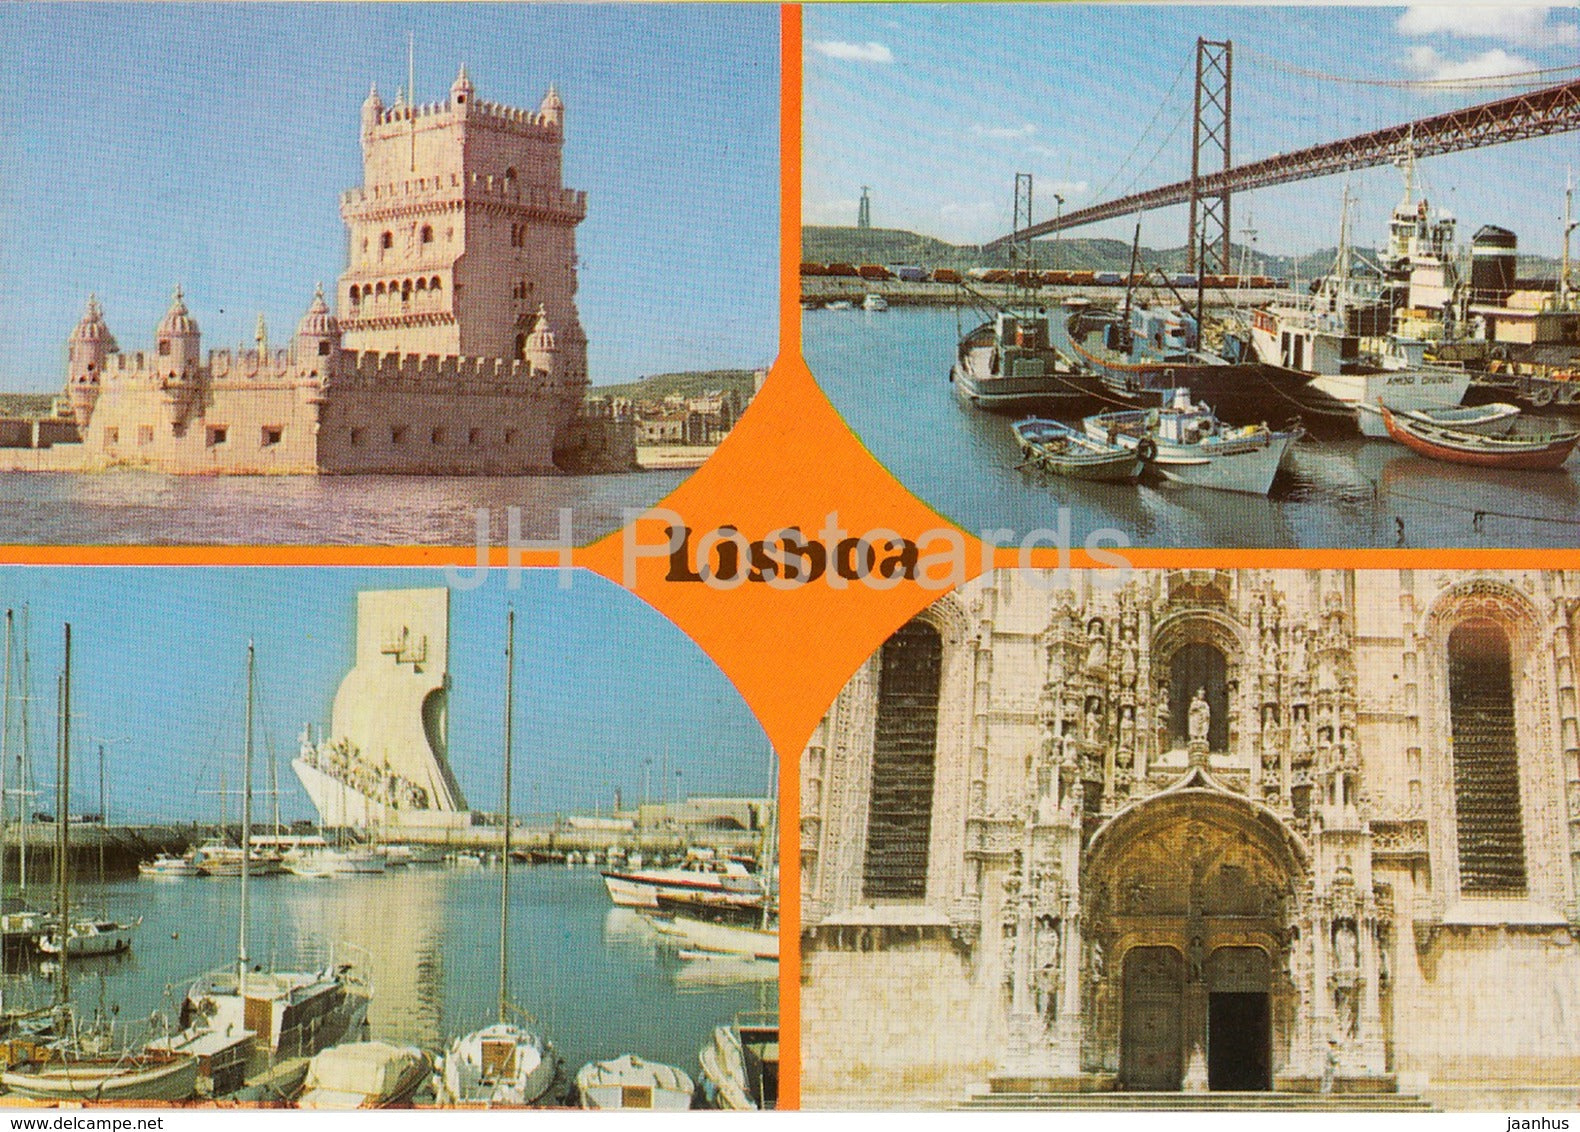 Lisboa - Aspecto da cidade - City view - multiview - ship - boat - 57 - Portugal - unused - JH Postcards